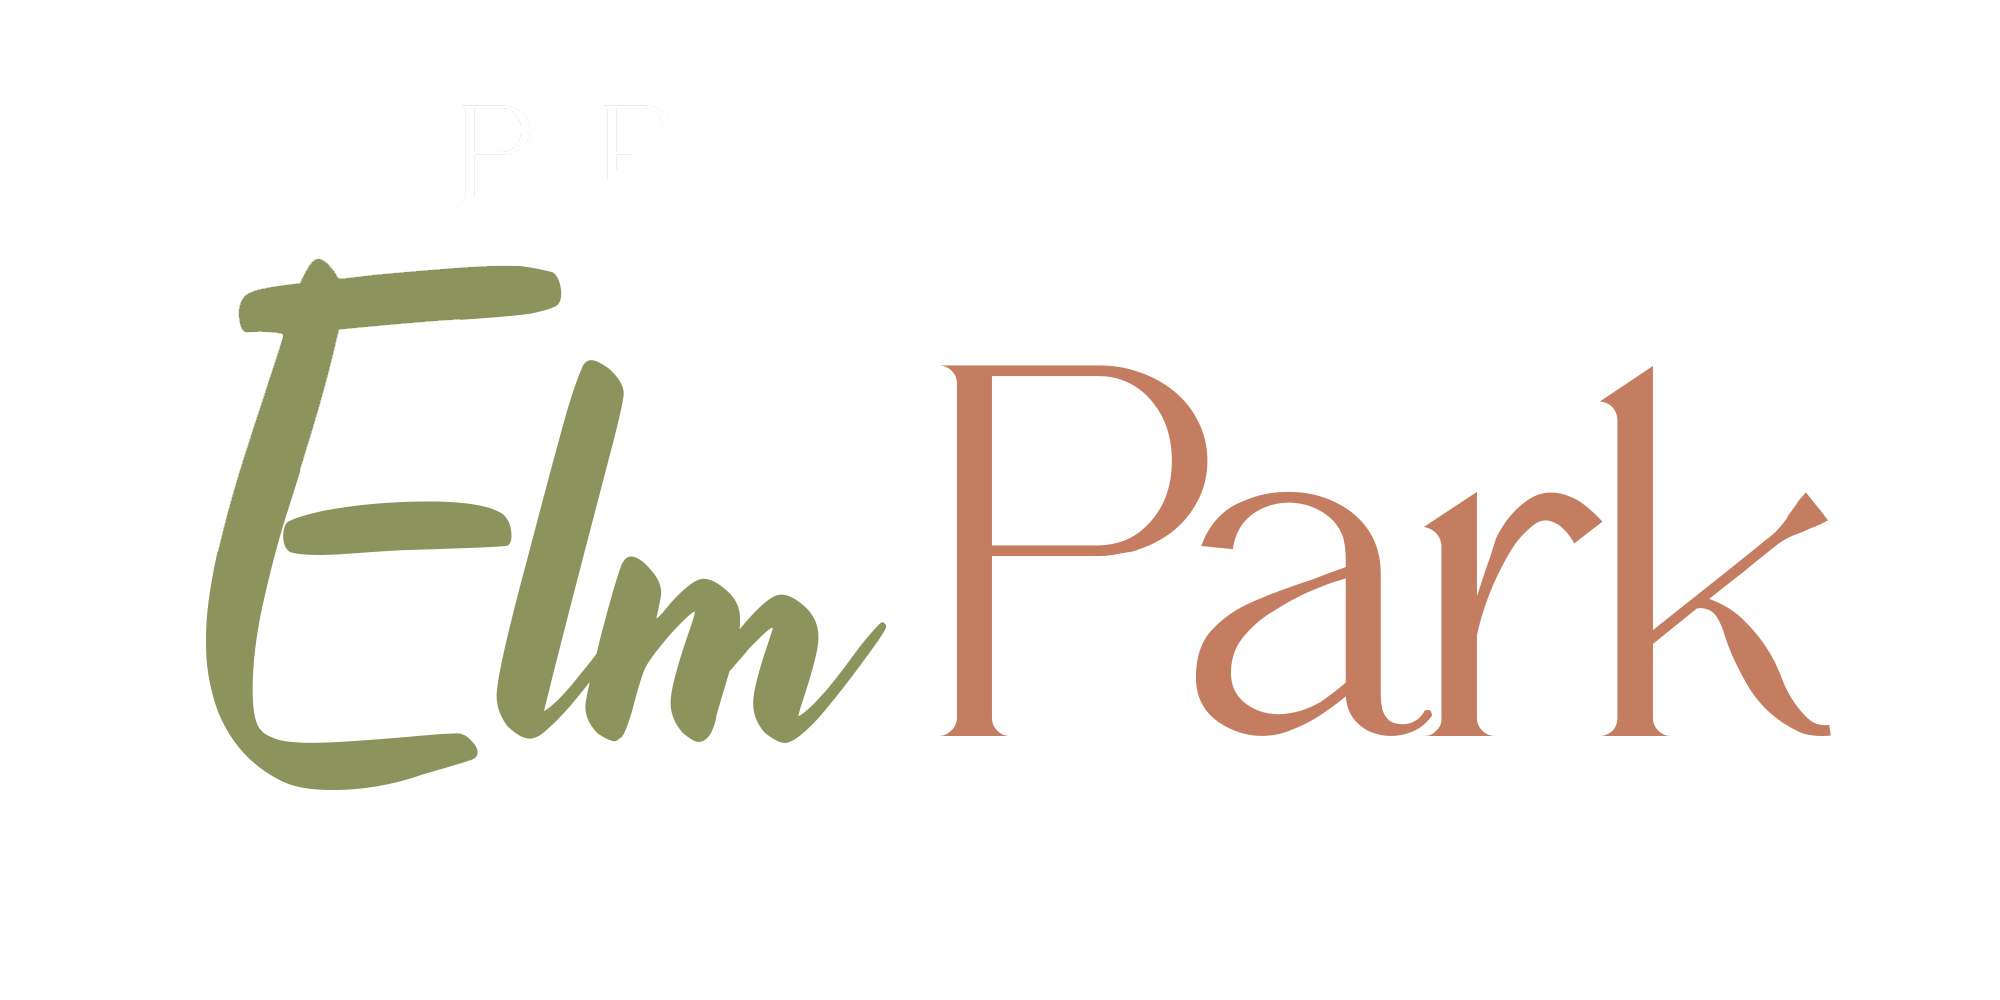 Prestige ELM Park